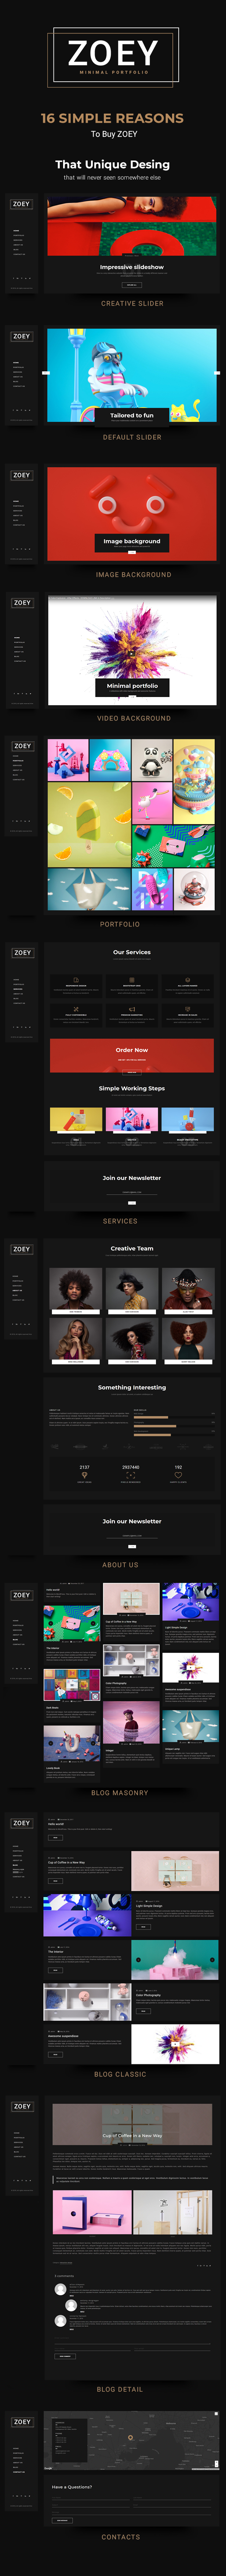 Zoey – Portfolio WordPress Theme